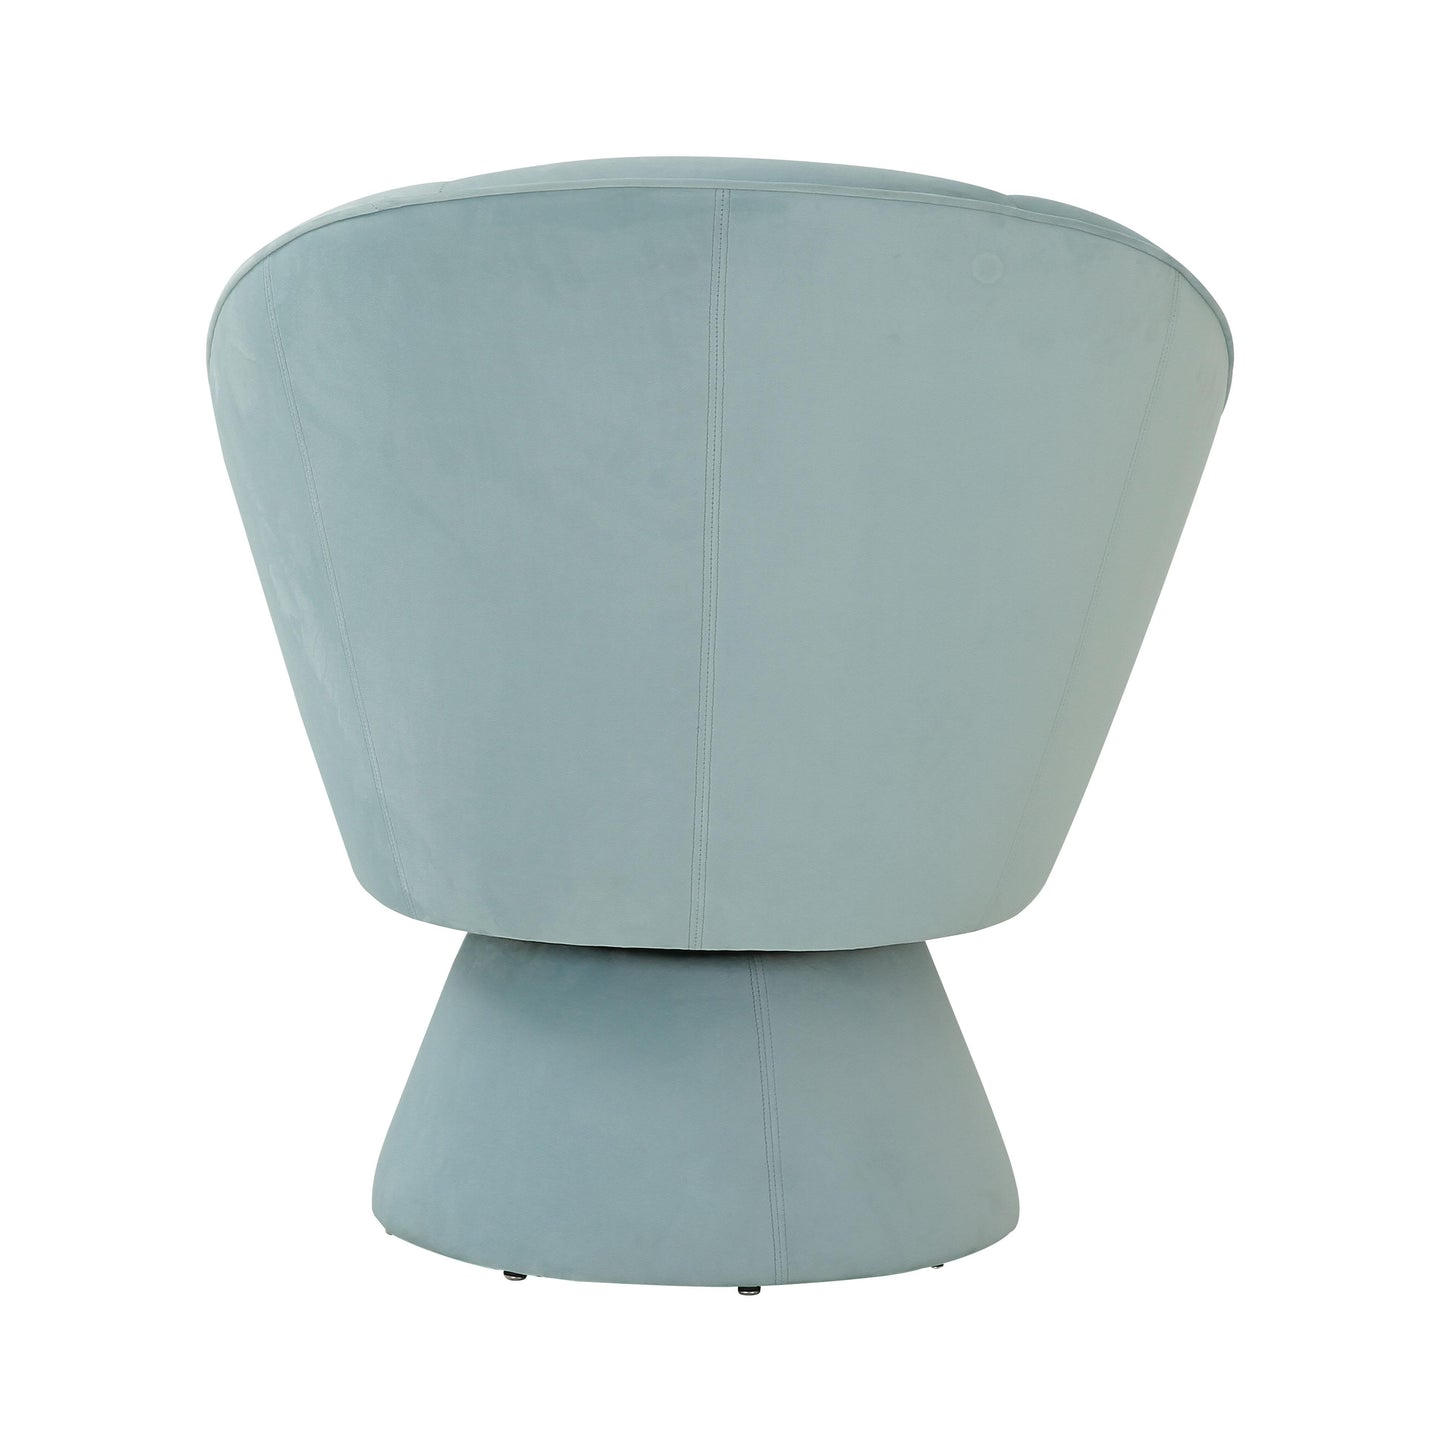 Tov Furniture Allora Light Blue Accent Chair